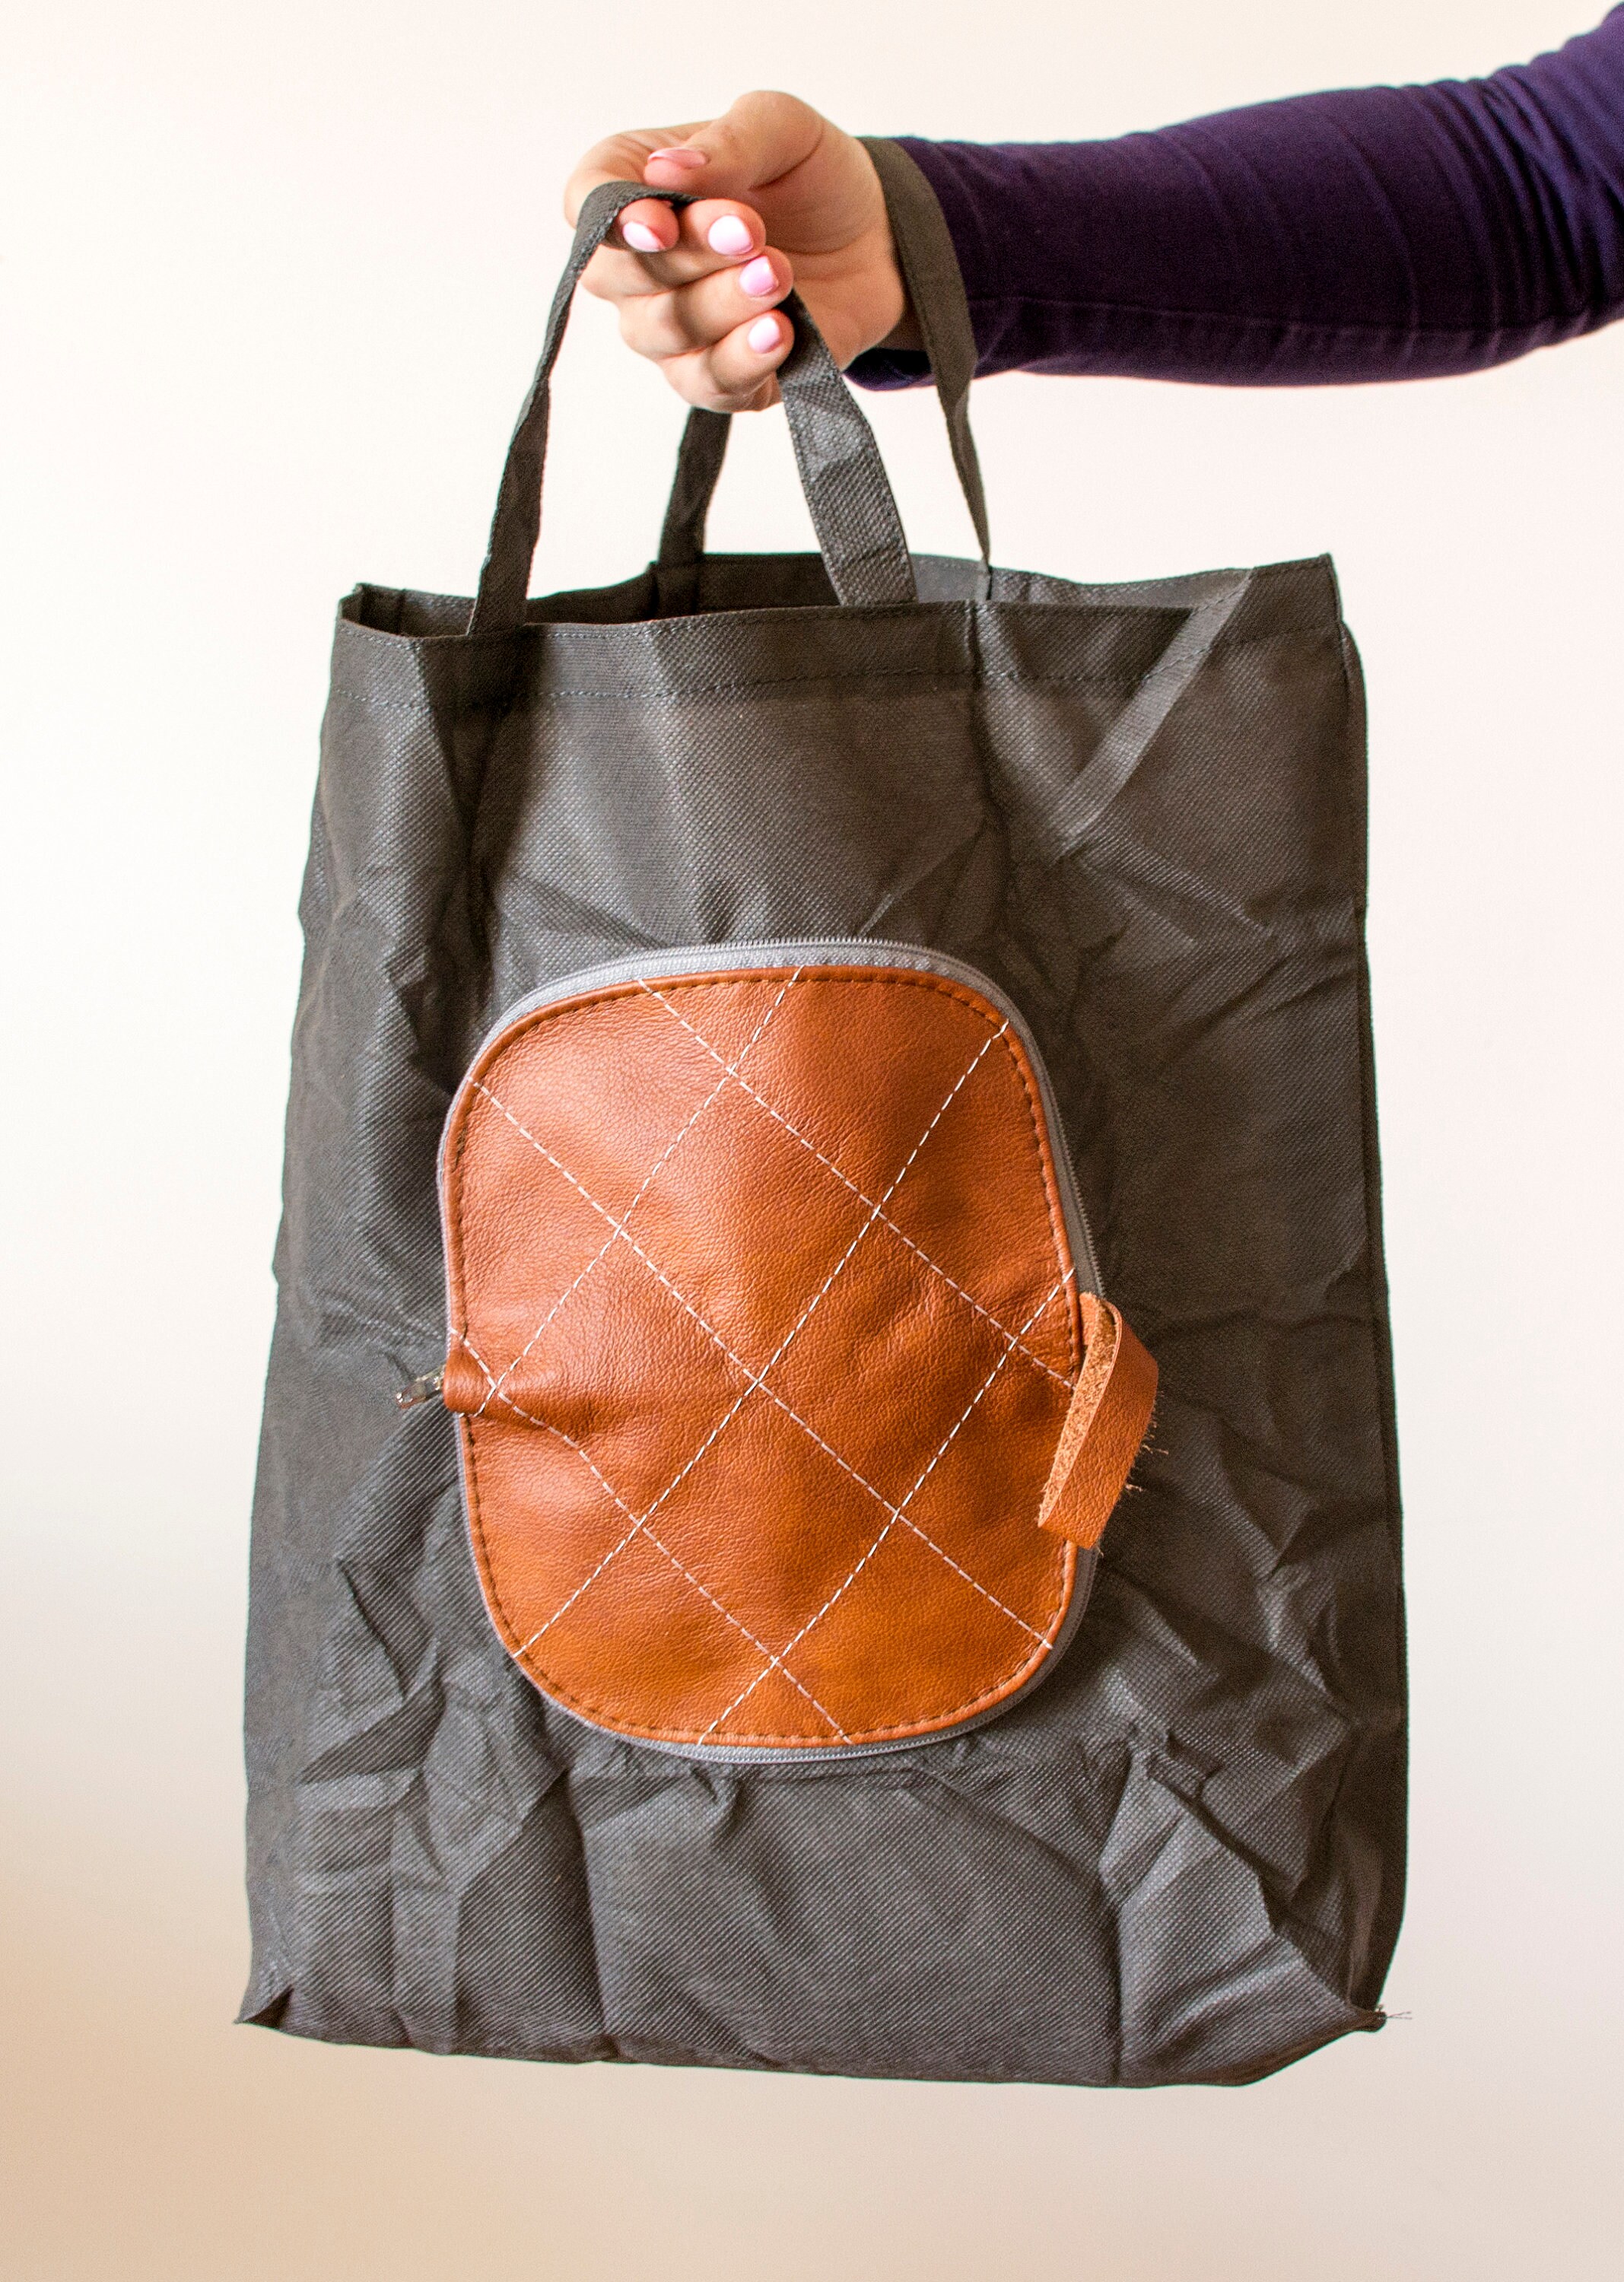 Market Foldable Bag. Grocery Bag. Reusable Shopping Bag. Zero | Etsy